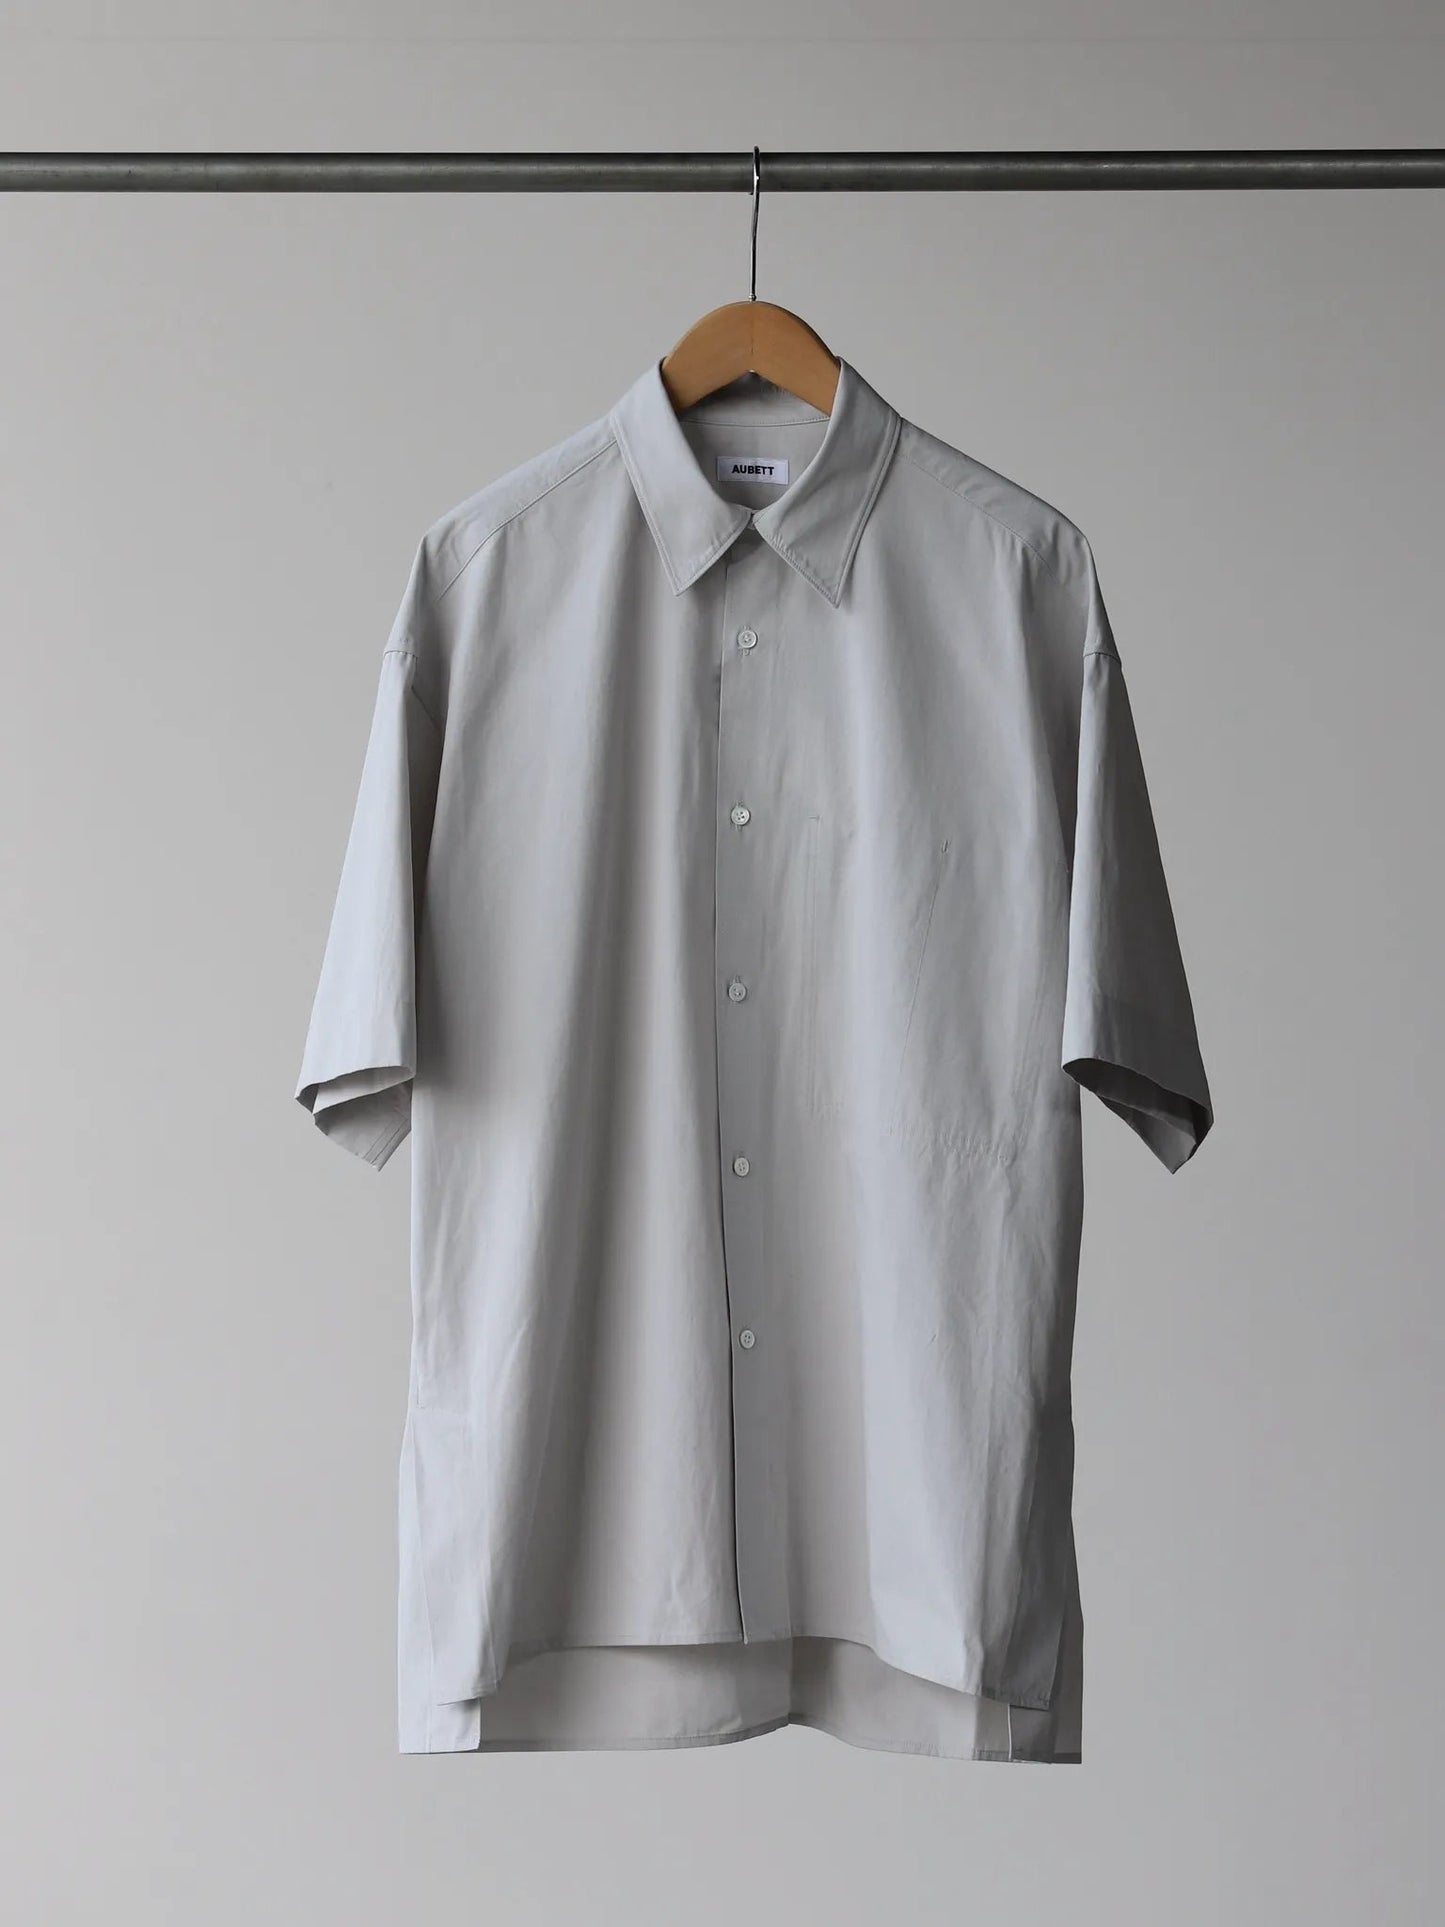 aubett-heavy-broad-oversized-short-sleeve-shirt-gray-1